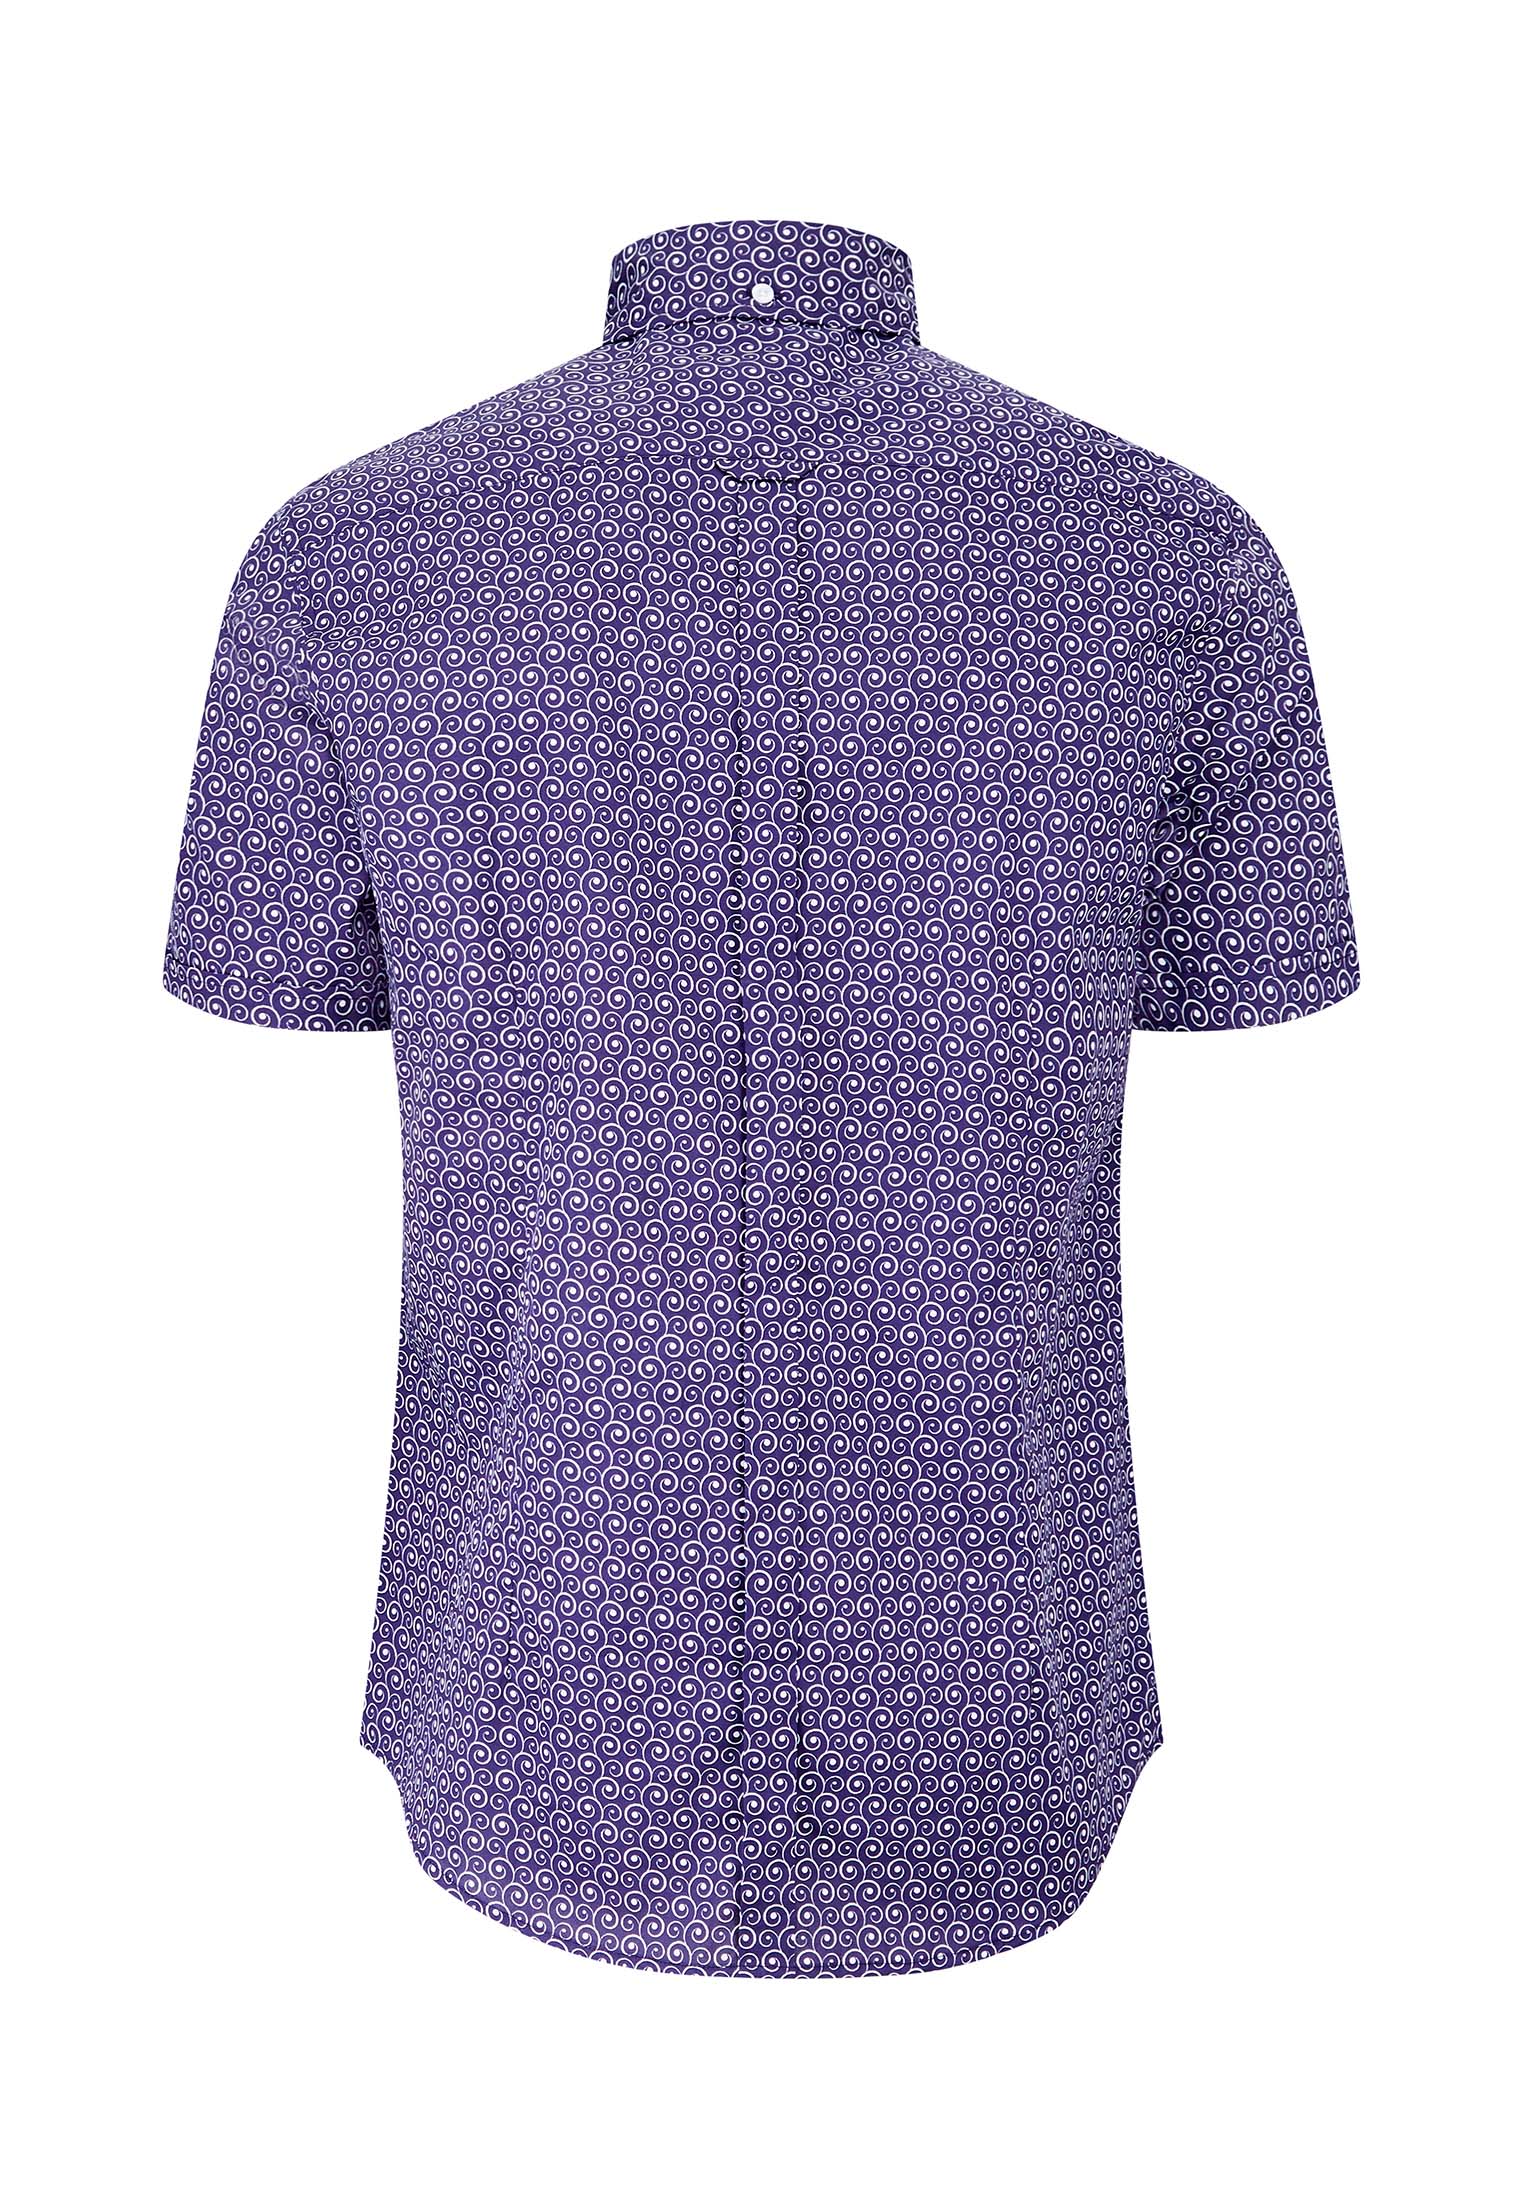 Blue Geometric Print Short Sleeve Shirt by Merc